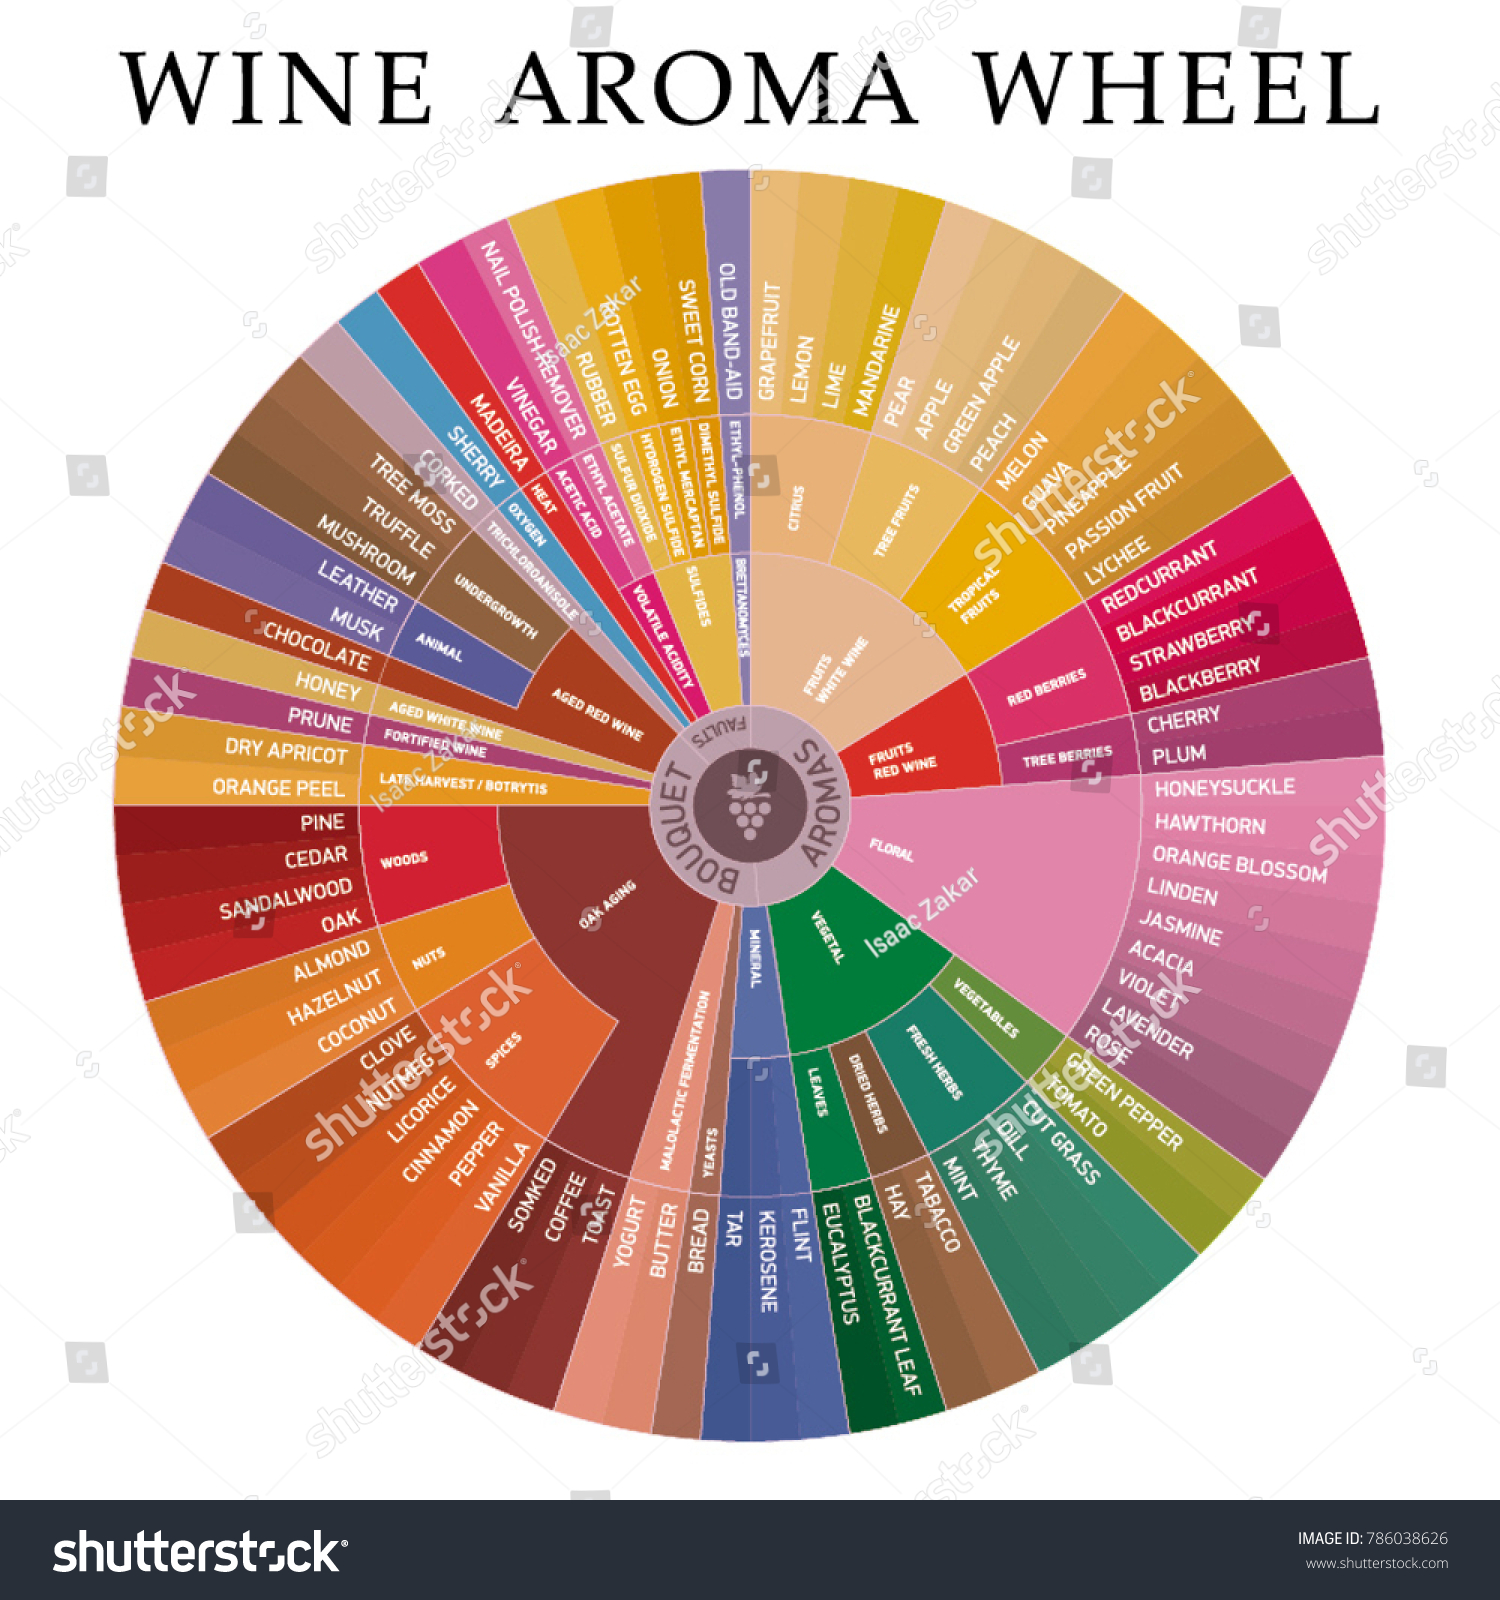 Vector wine aroma wheel #786038626